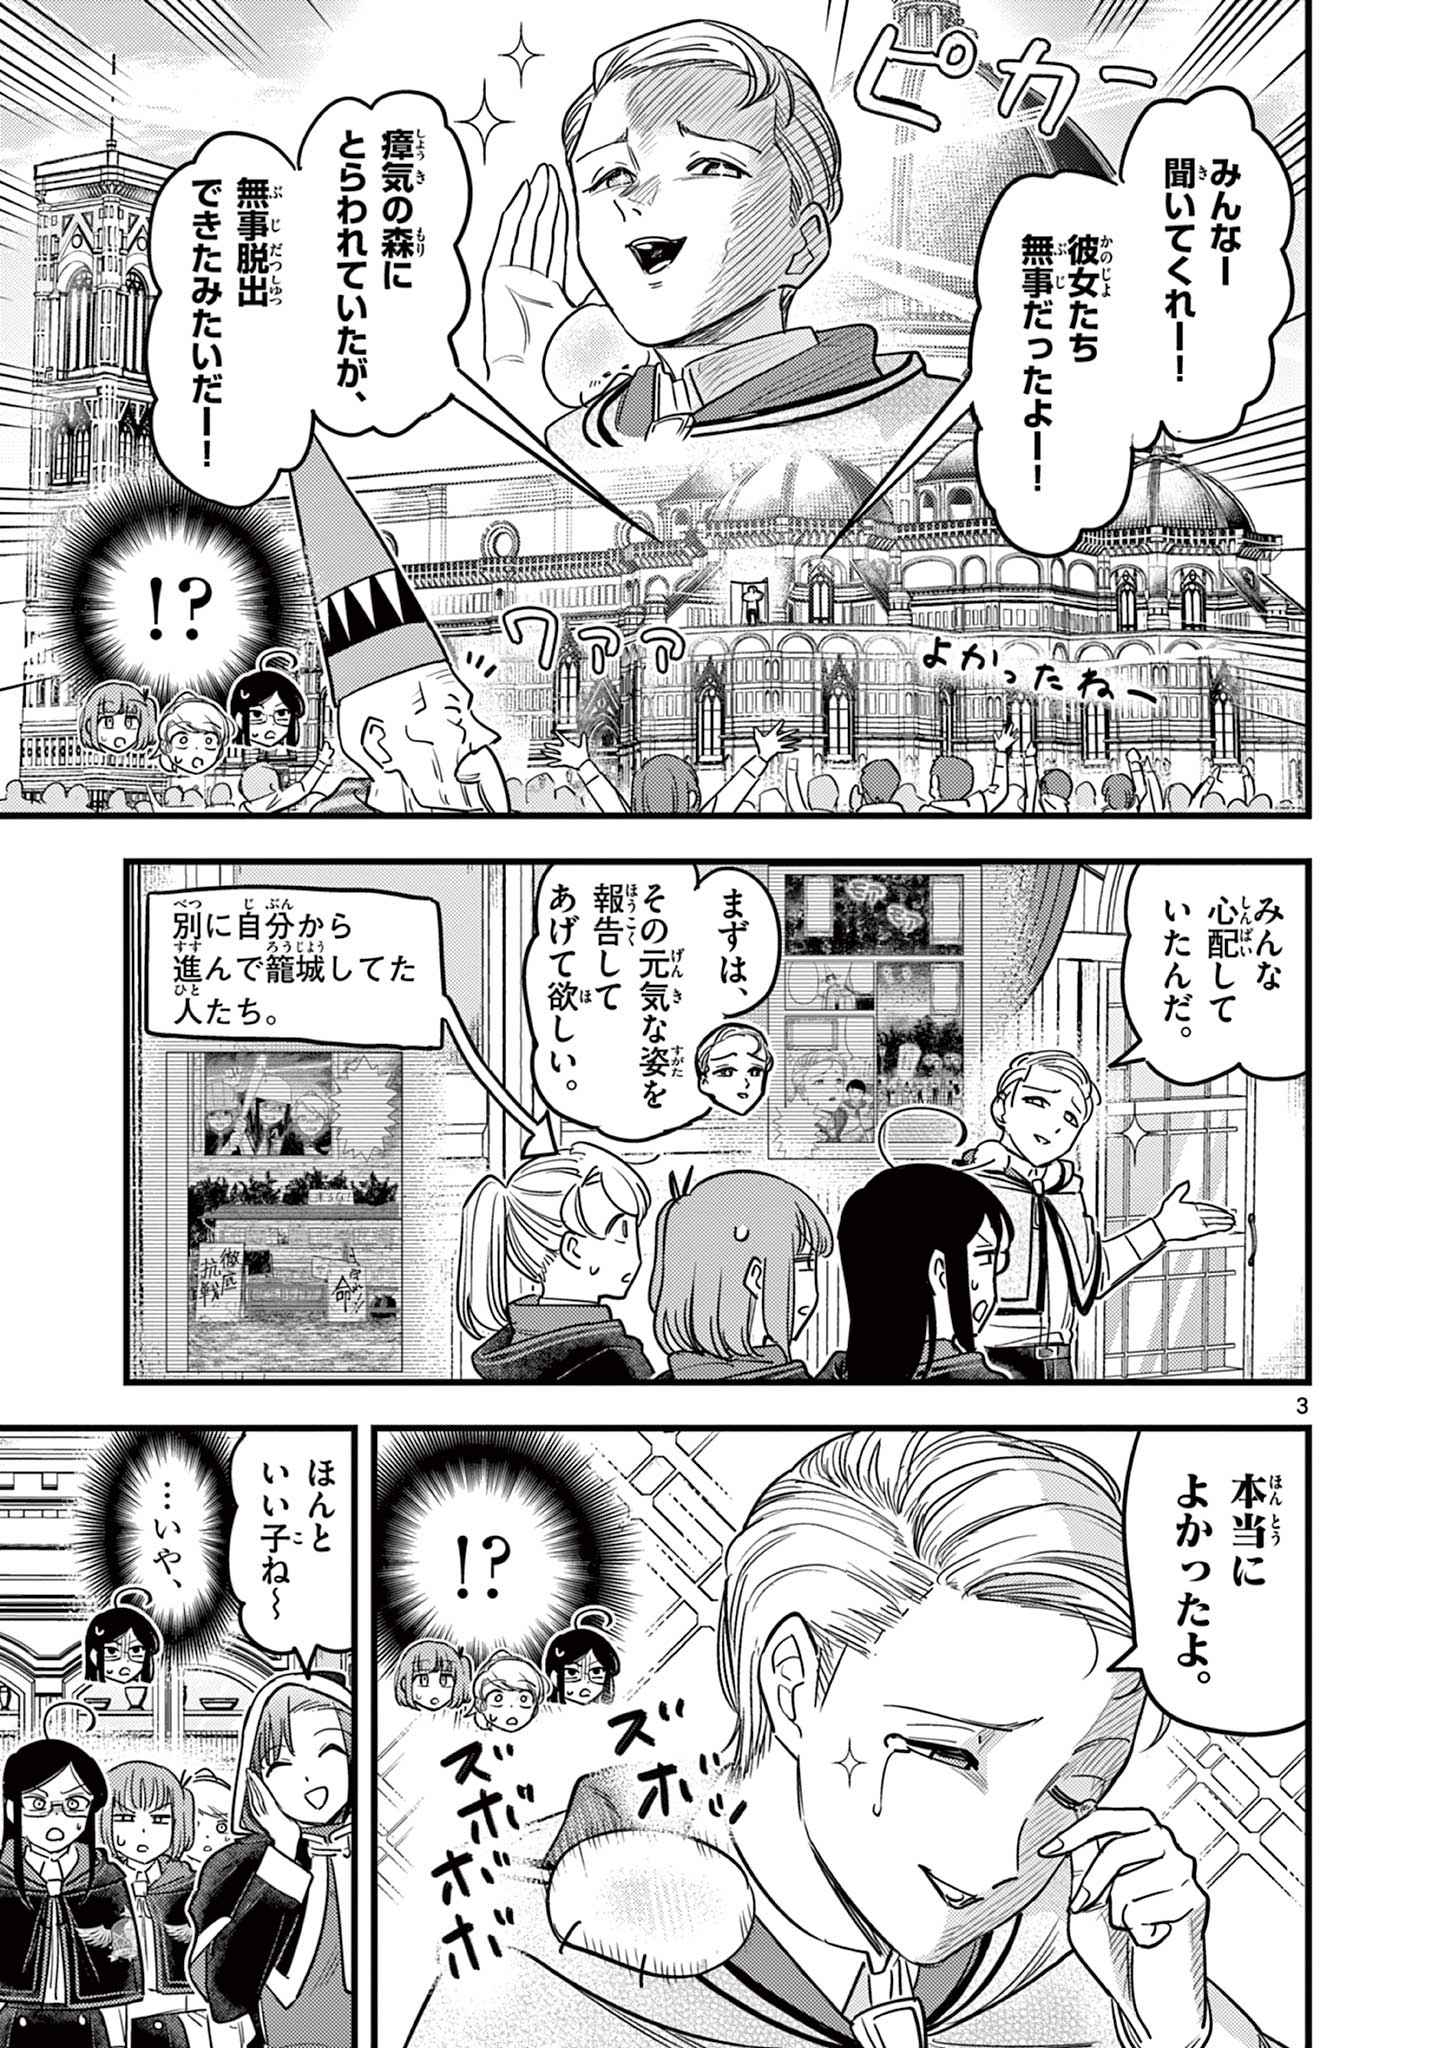 Kuro Mahou Ryou no Sanakunin - Chapter 11 - Page 3